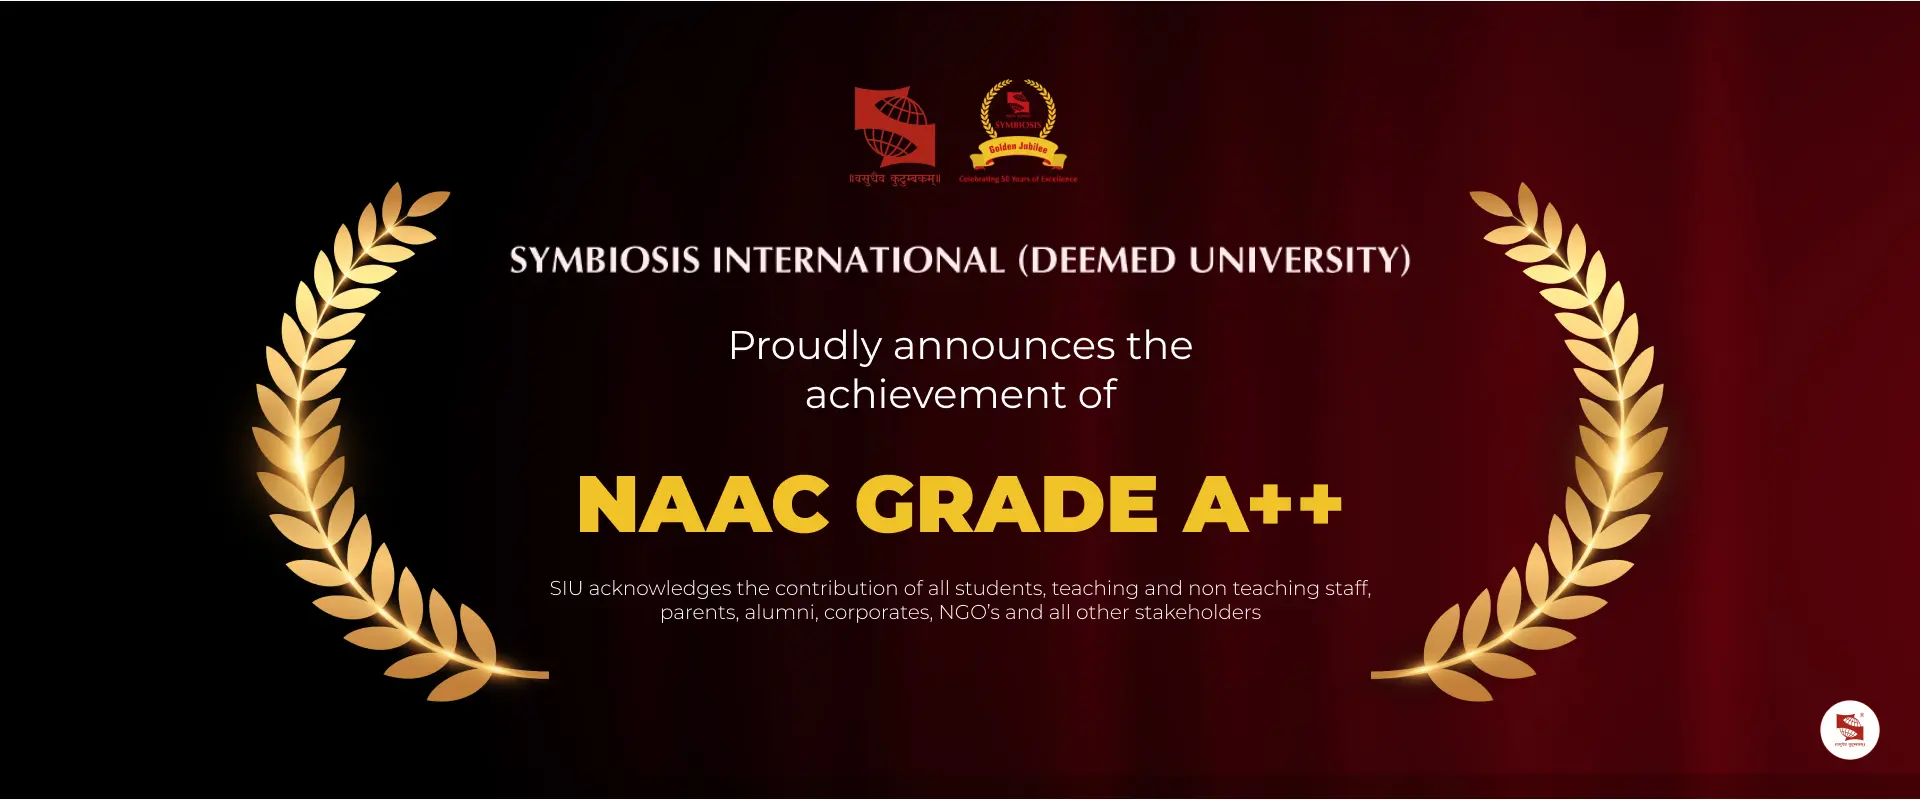 Best Institute for Mass Communication in India - SCMC, Pune  NAAC Grade A++